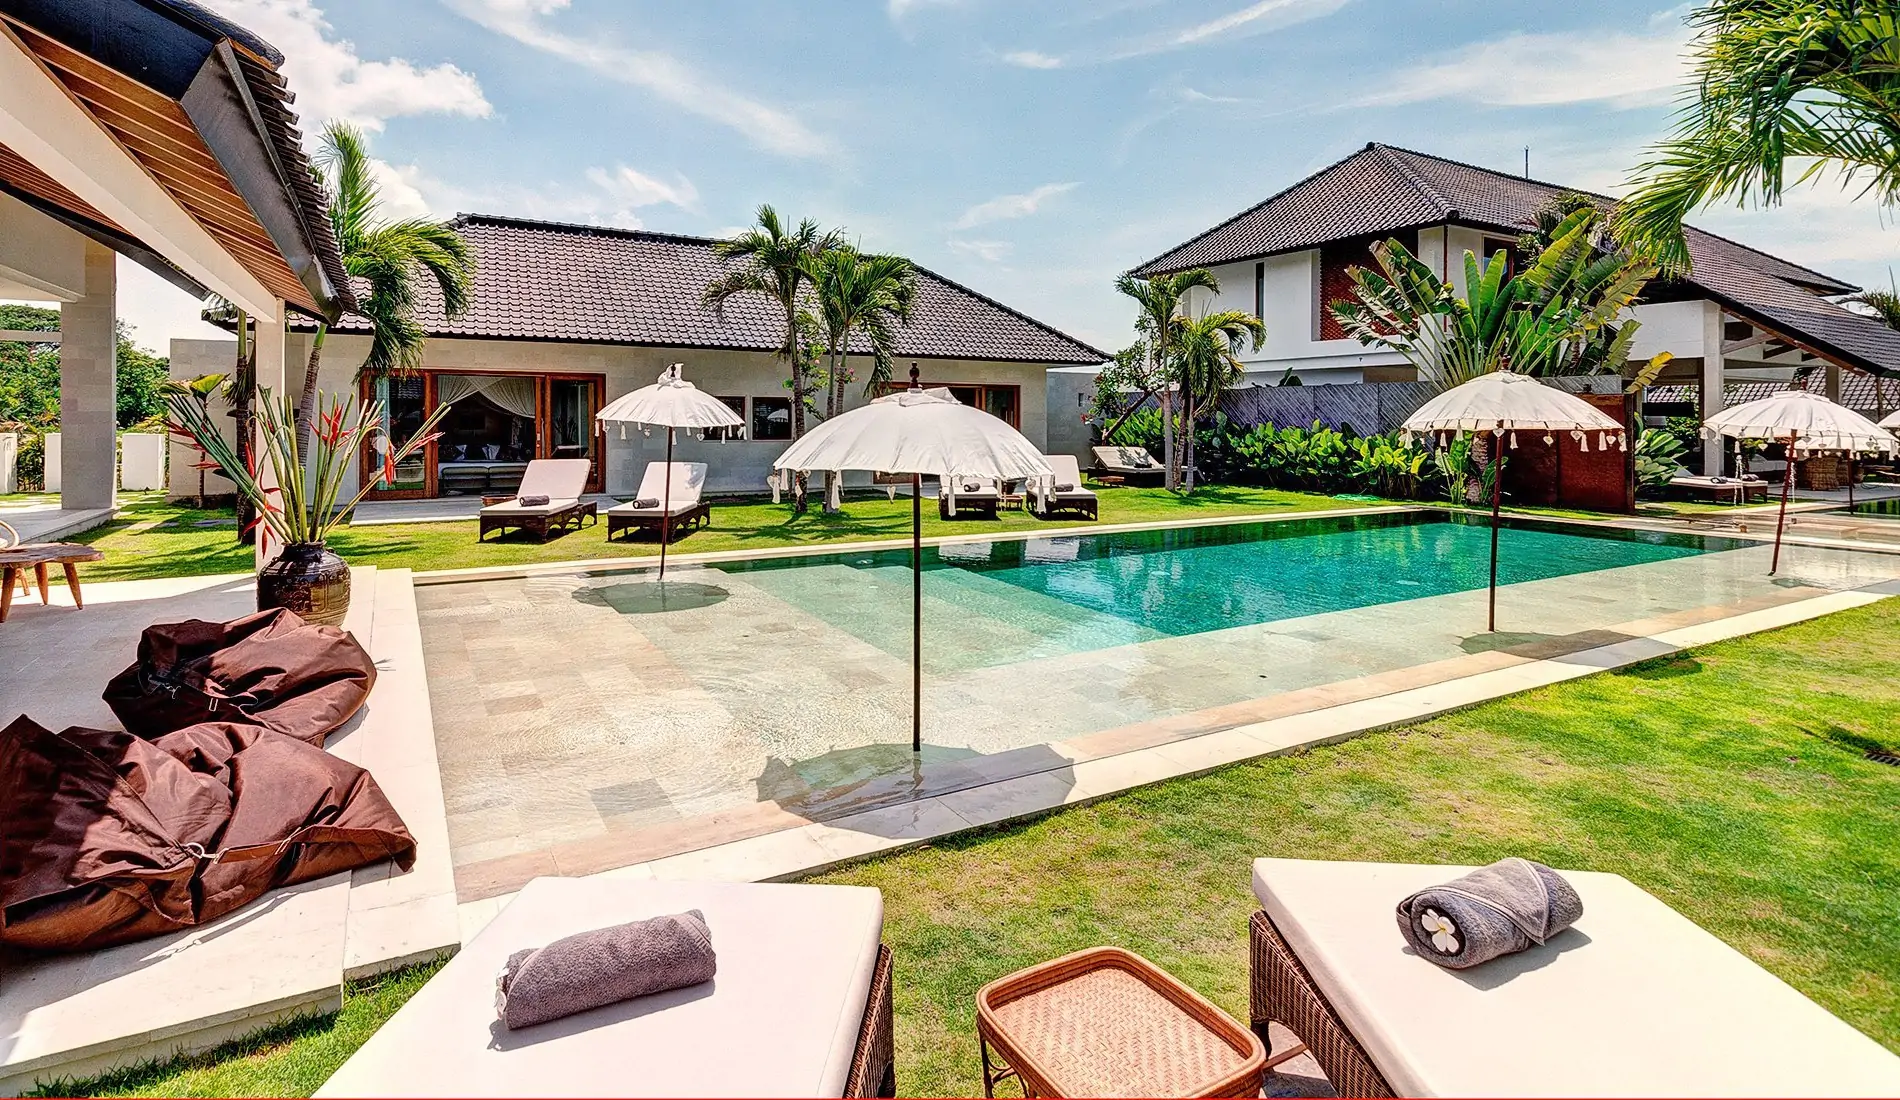 Swimming Pool With Lounge - Villa Abaca, Seminyak Bali